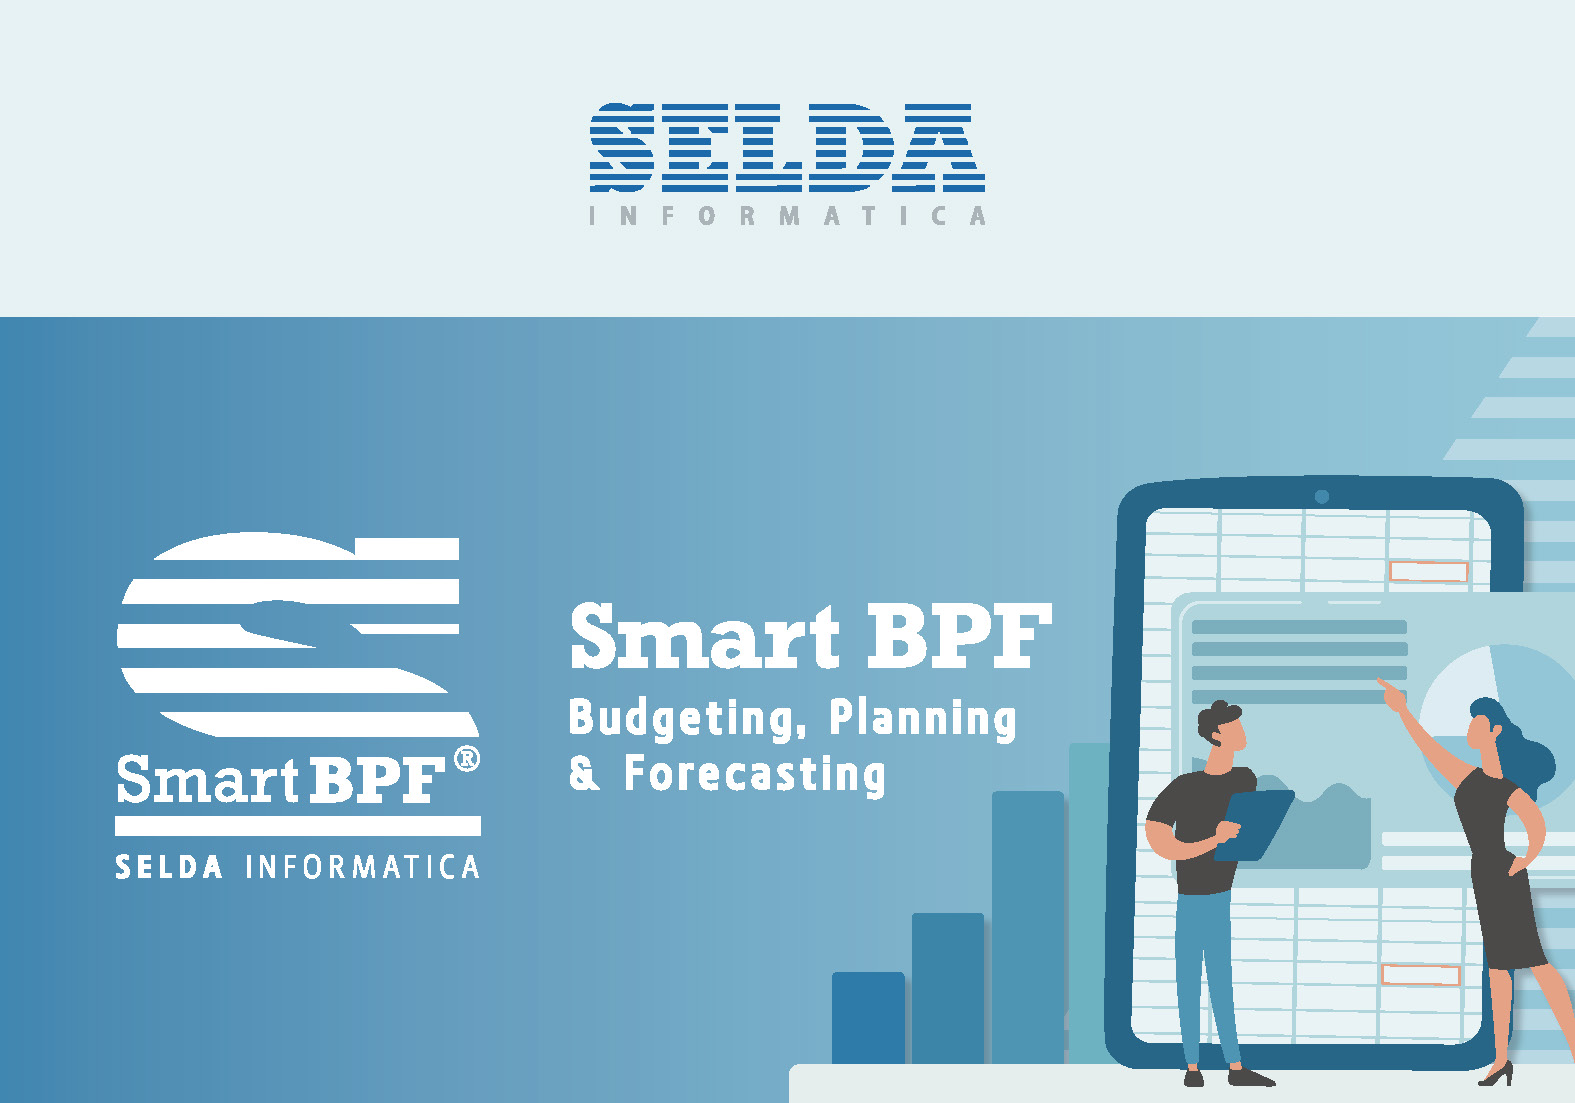 Smart BPF - Budgeting, Planning & Forecasting